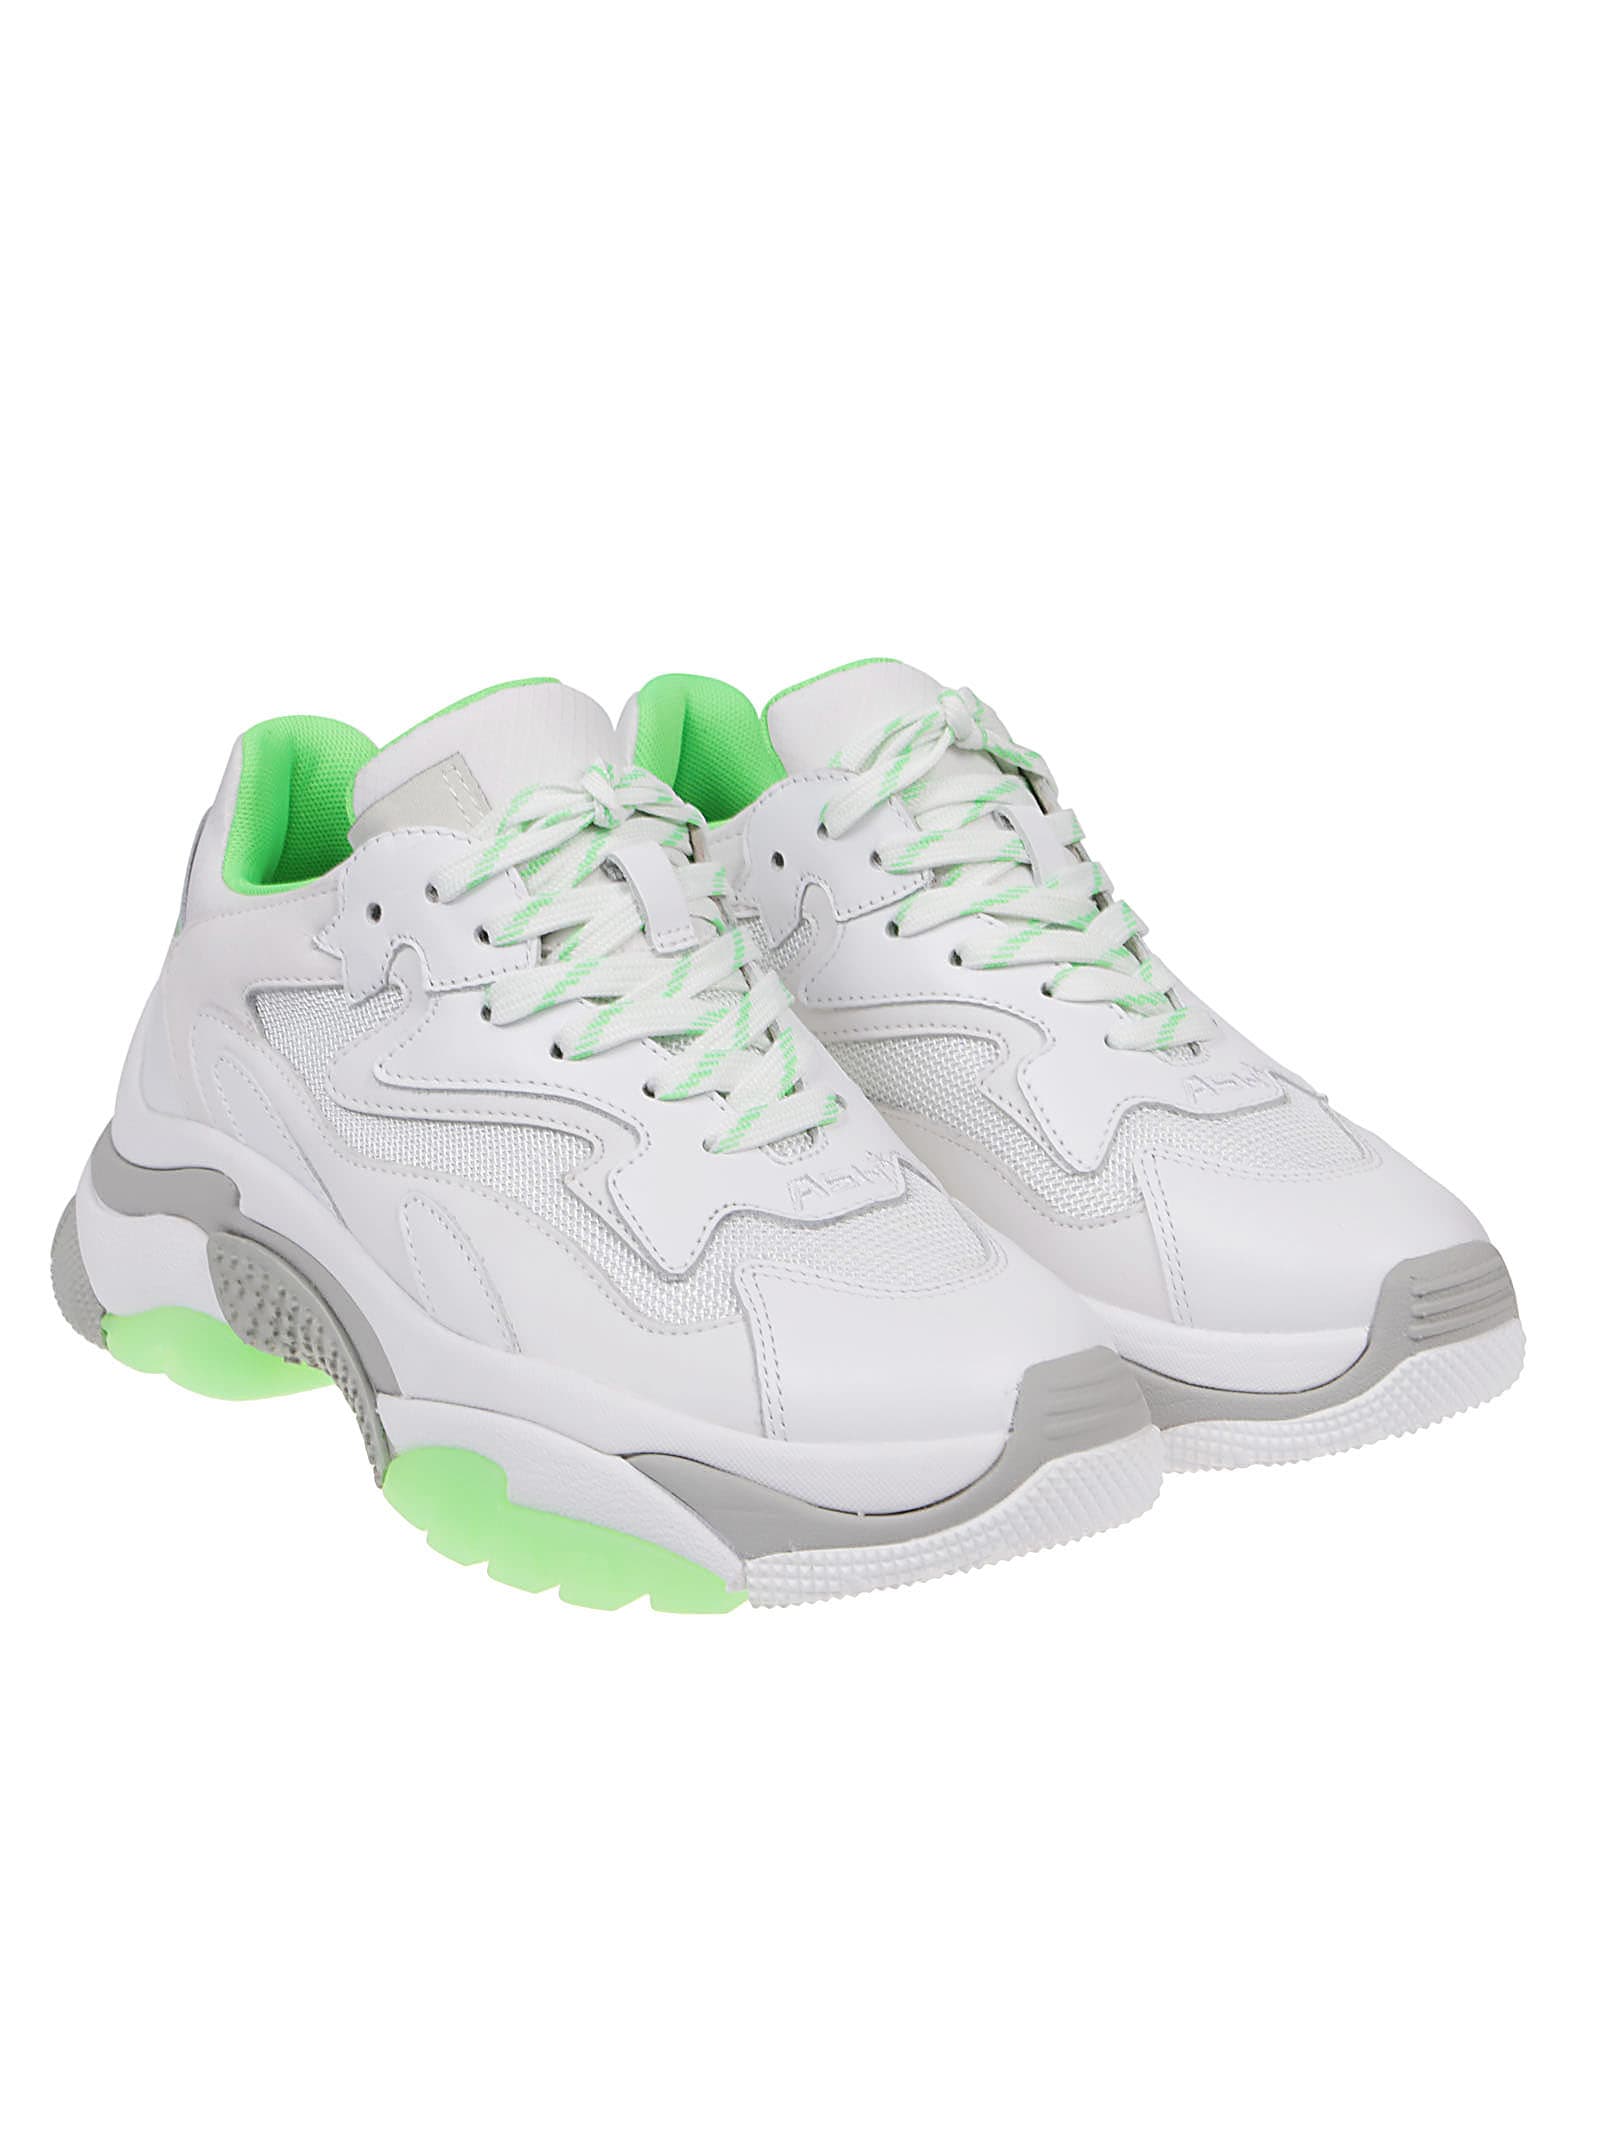 Ash sneakers white/ neon green